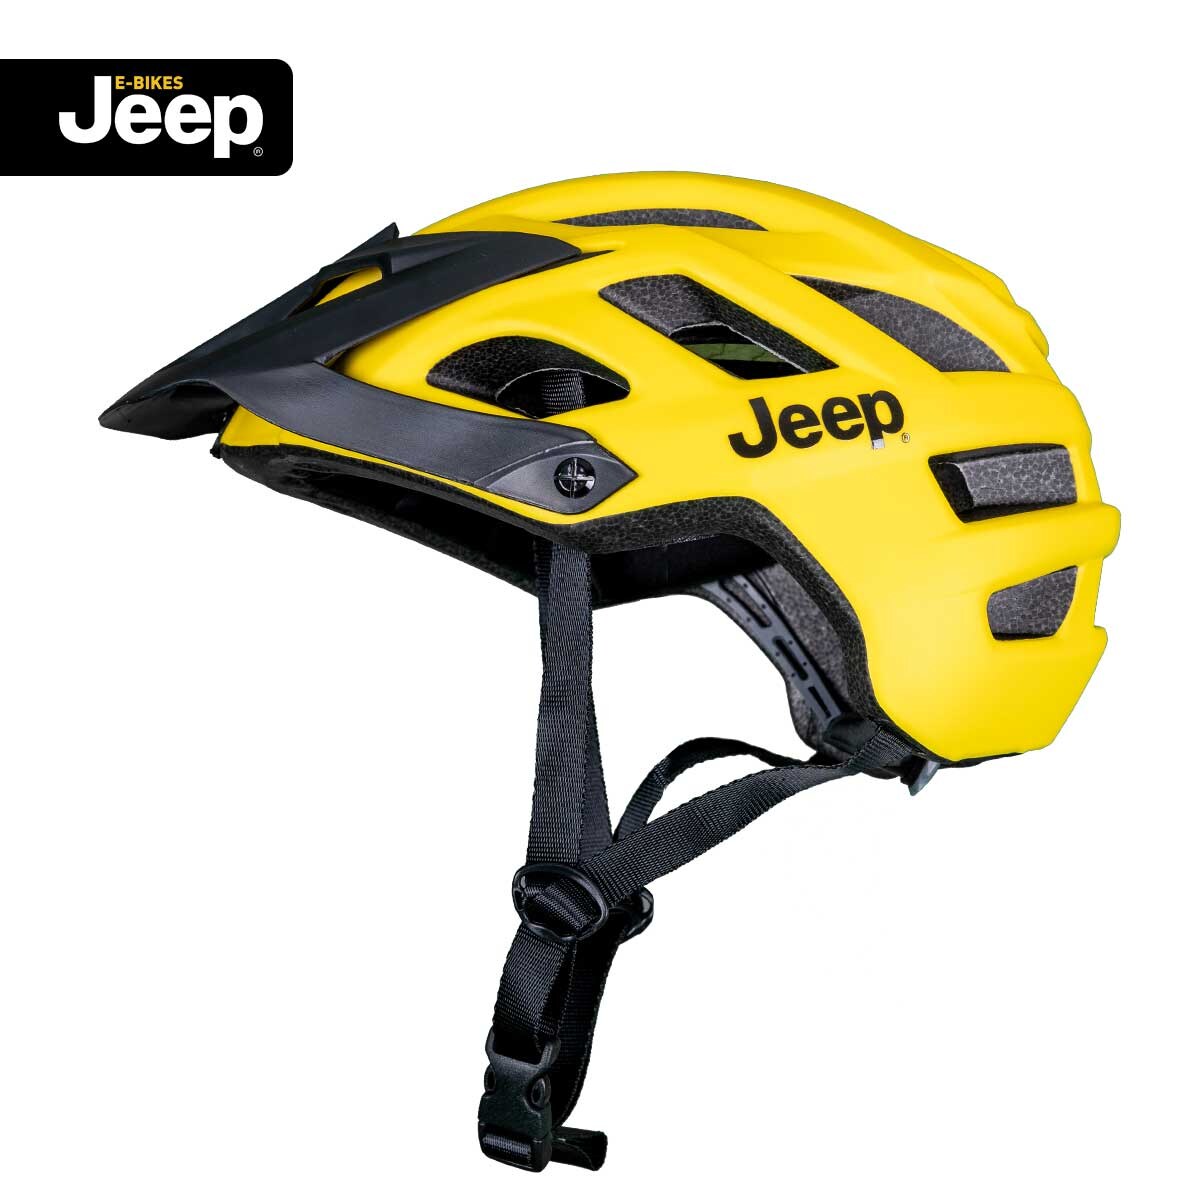 Jeep E-Bikes Helm Pro yellow L